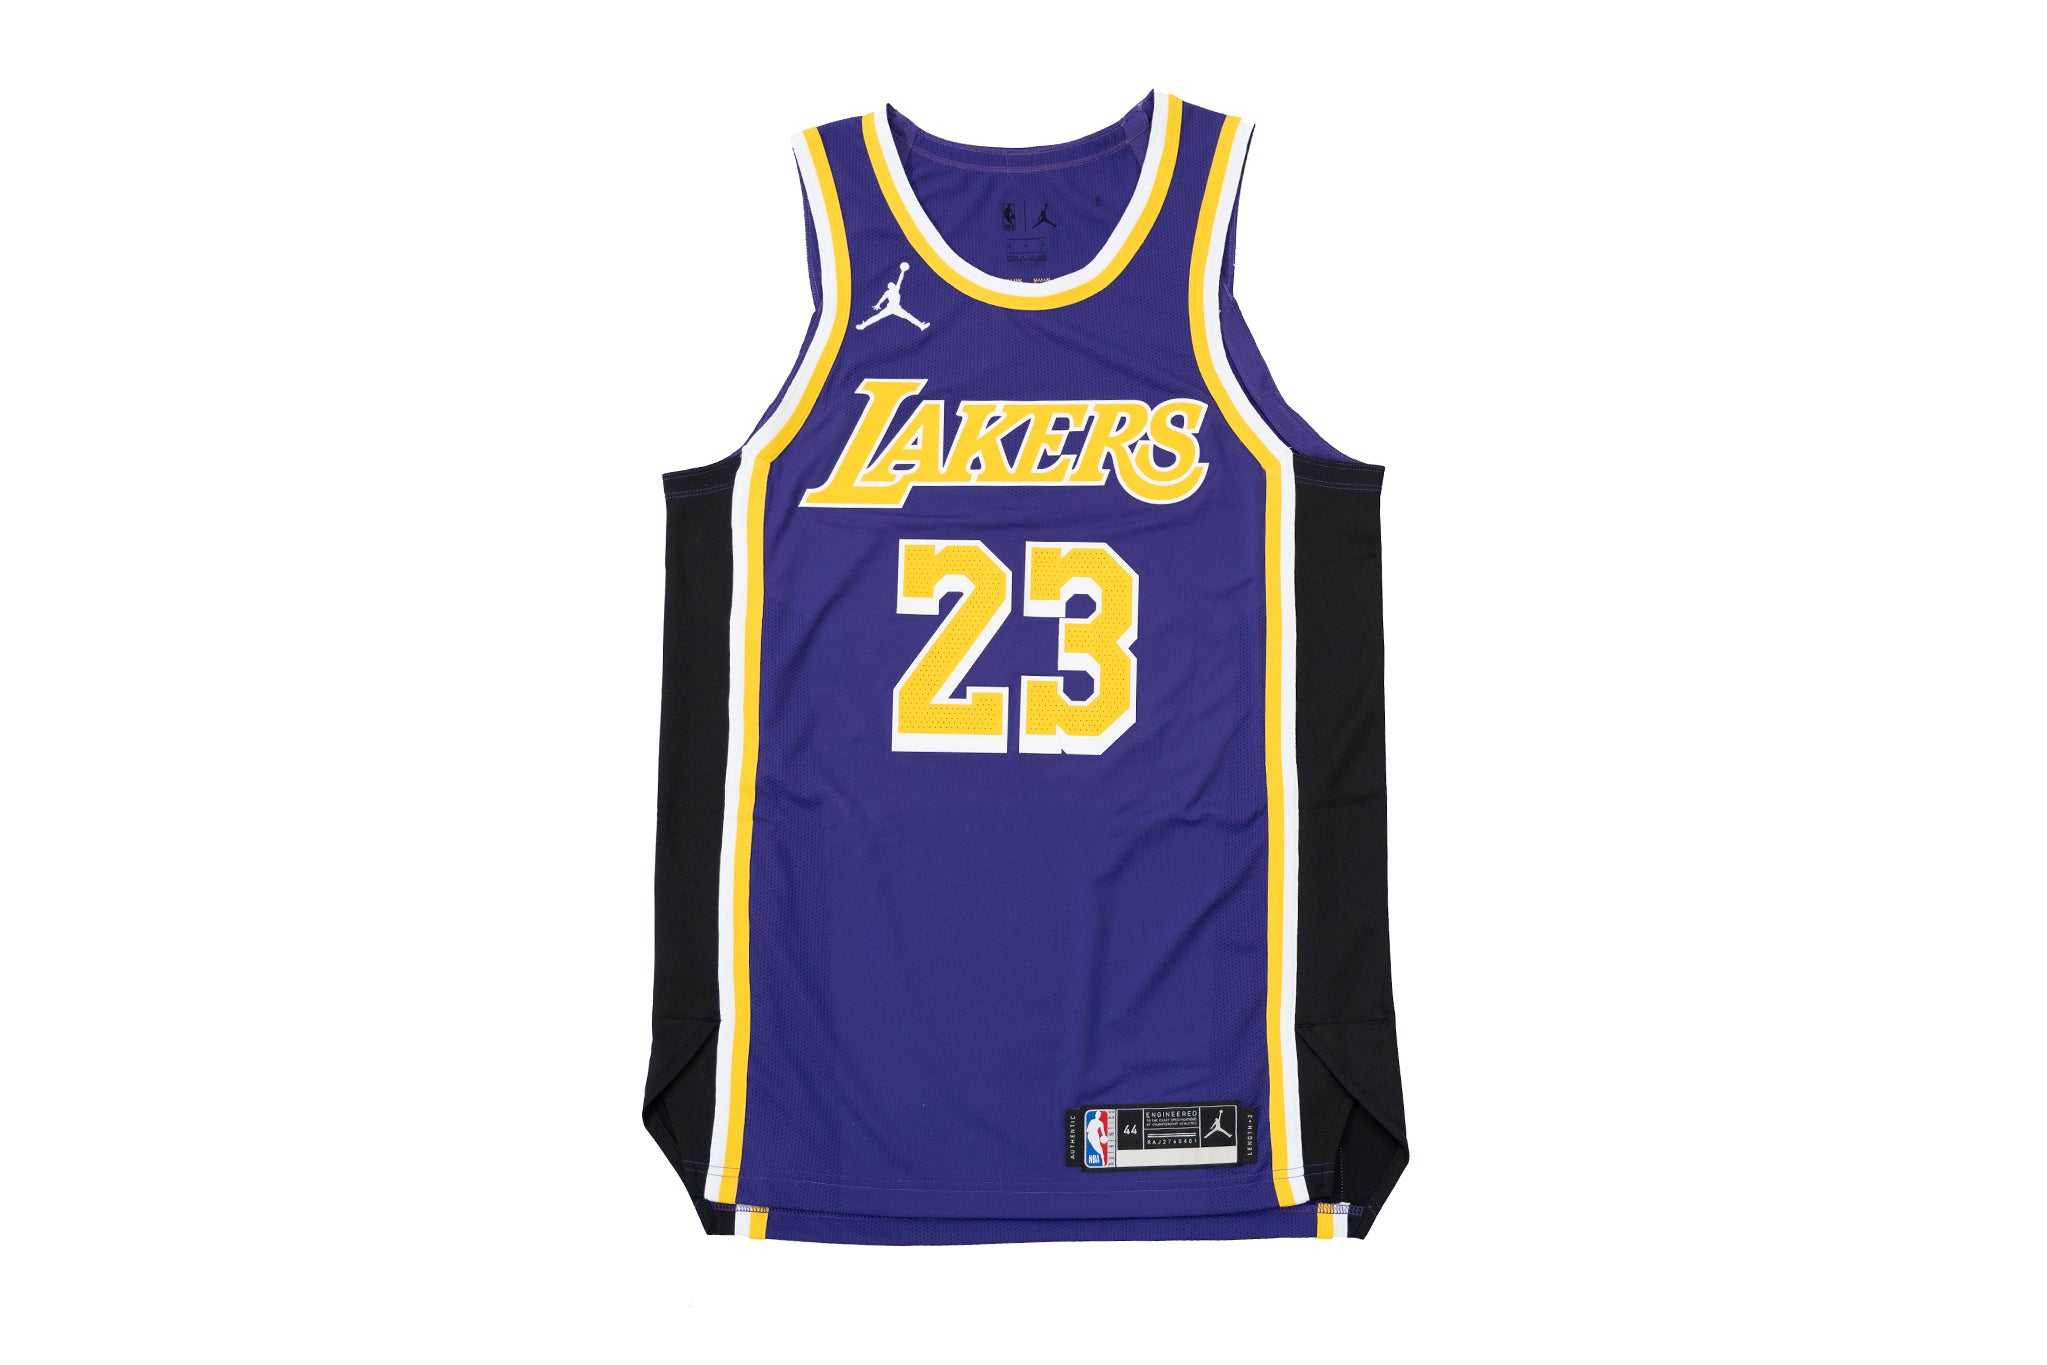 NIKE NBA Lebron James Lakers Jordan Authentic Statement Jersey SZ 44 M  Purple